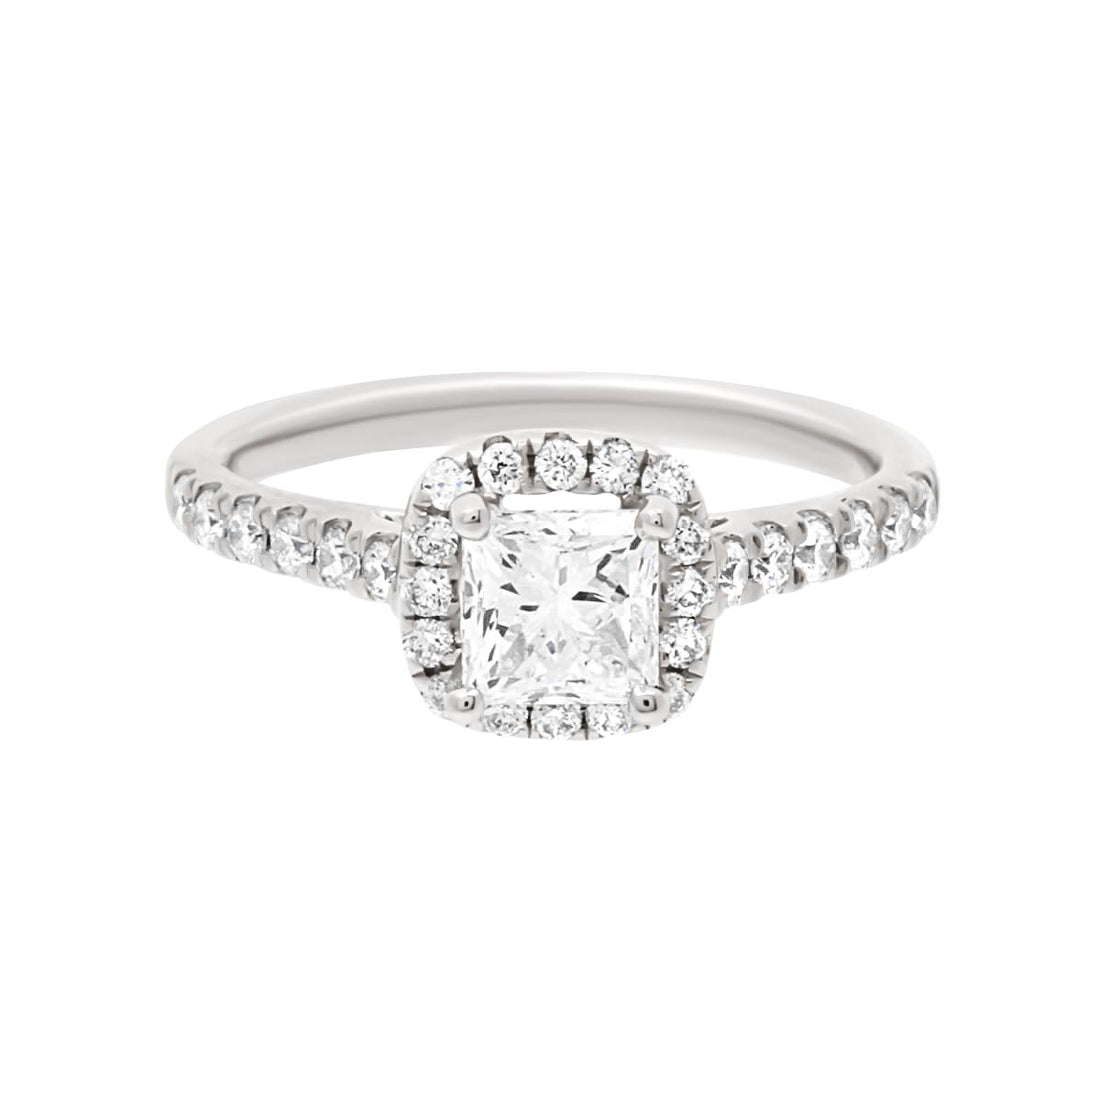 Princess Cut Diamond Halo Ring in white gold